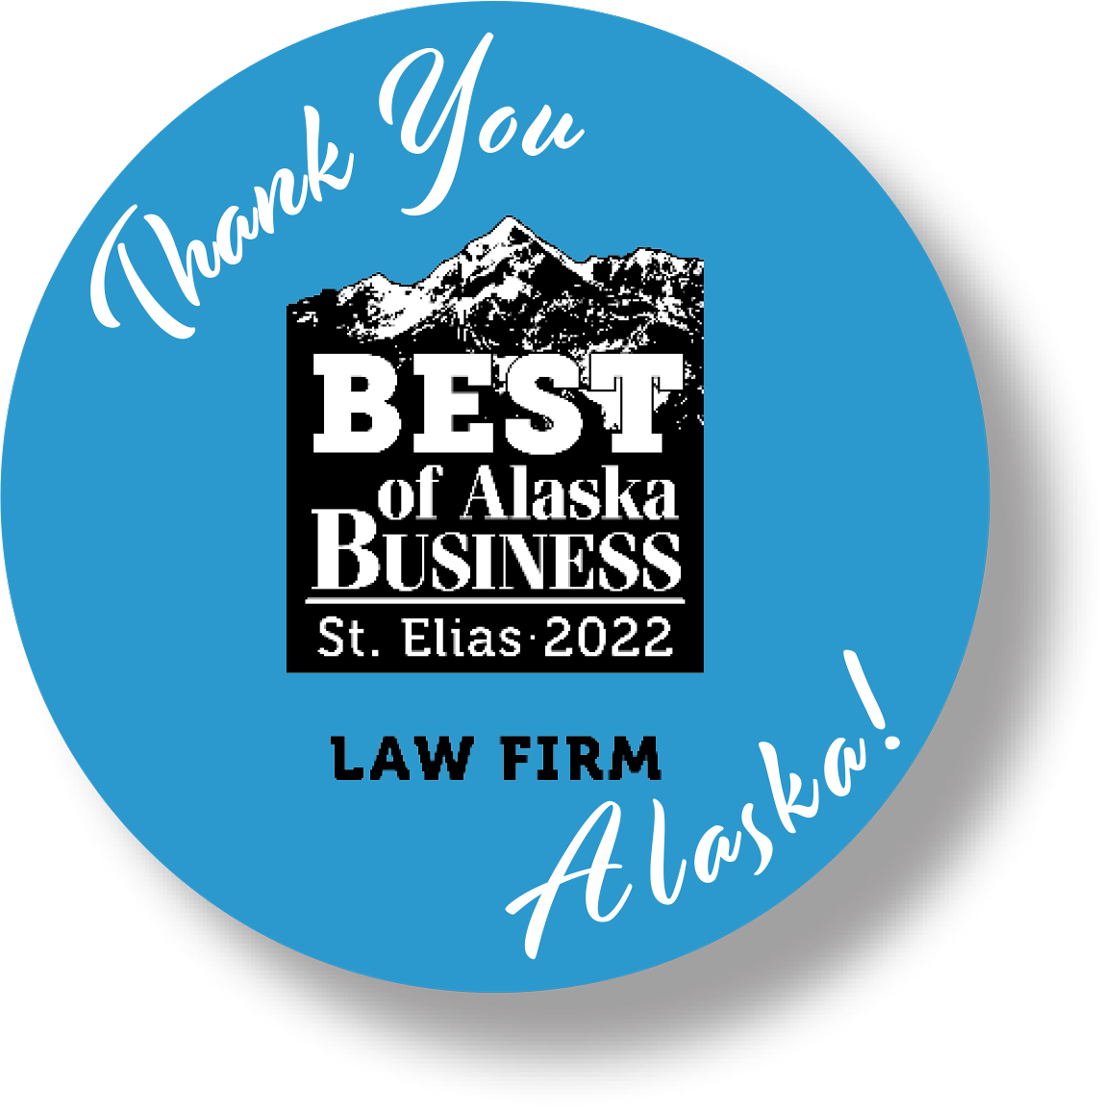 Thank you Alaska! BOAB St. Elias 2022 Law Firm